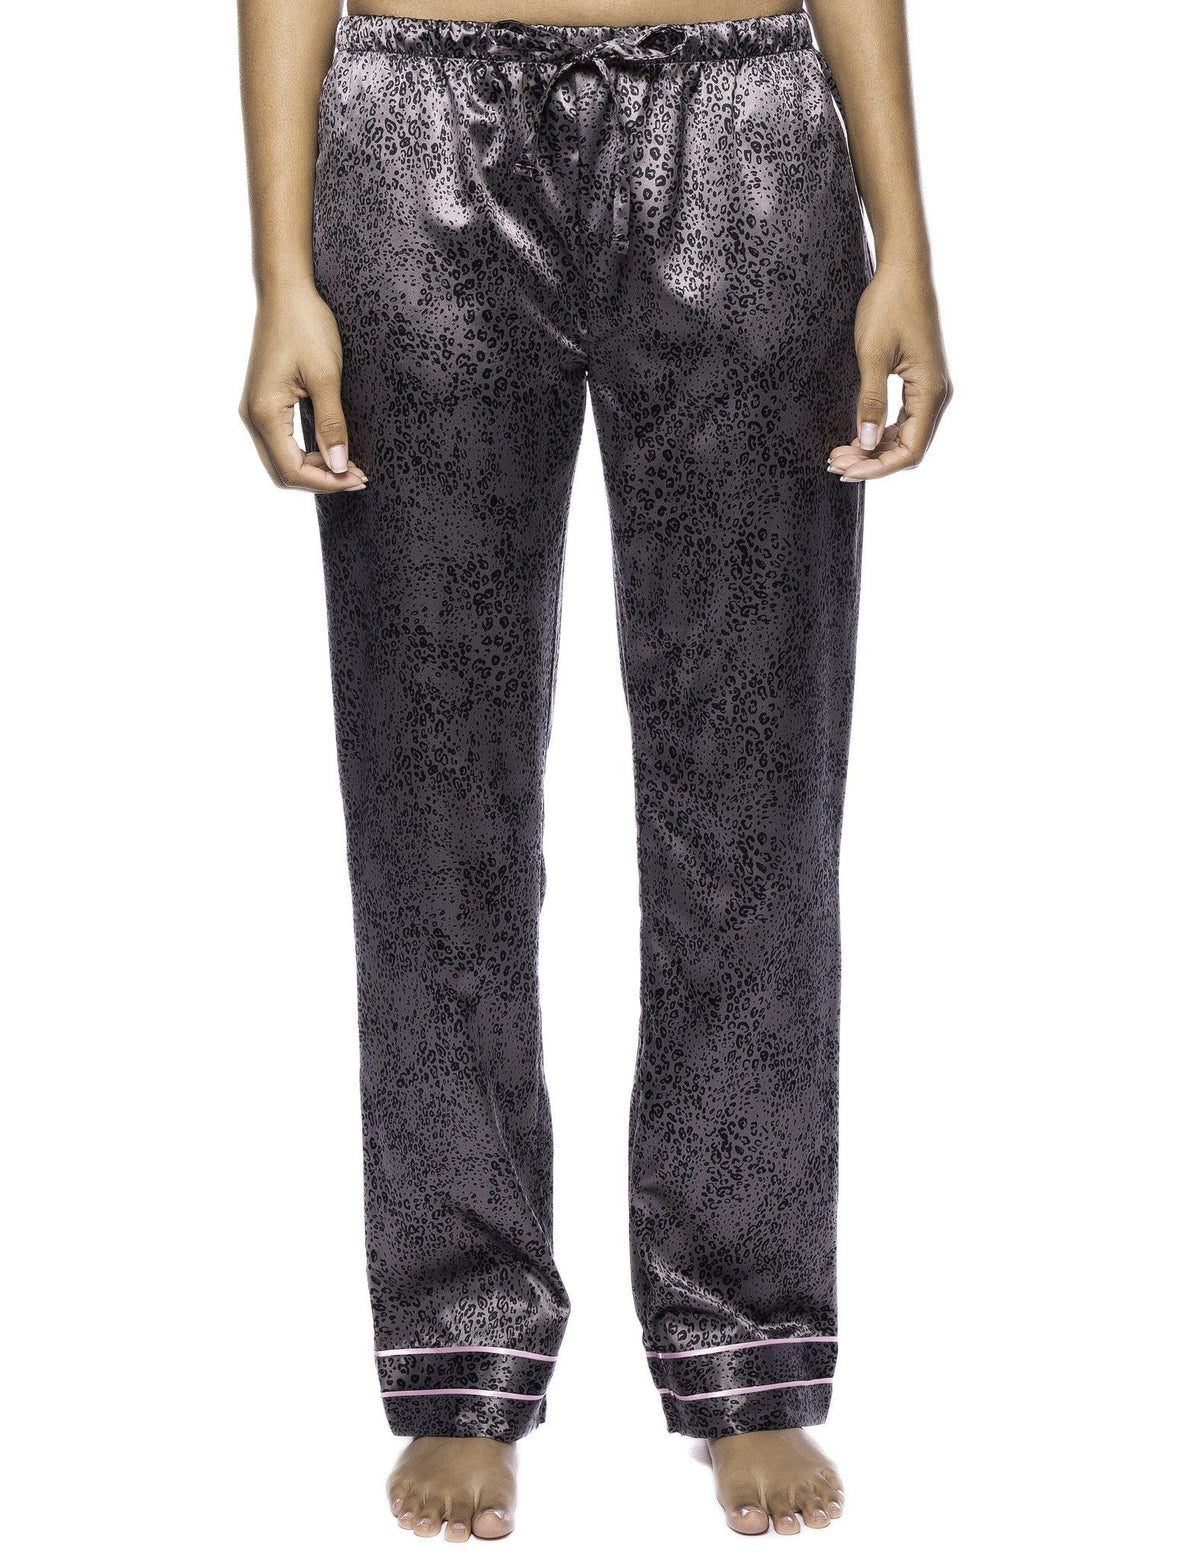 Women's Classic Satin Lounge Pants - Leopard Black/Grey